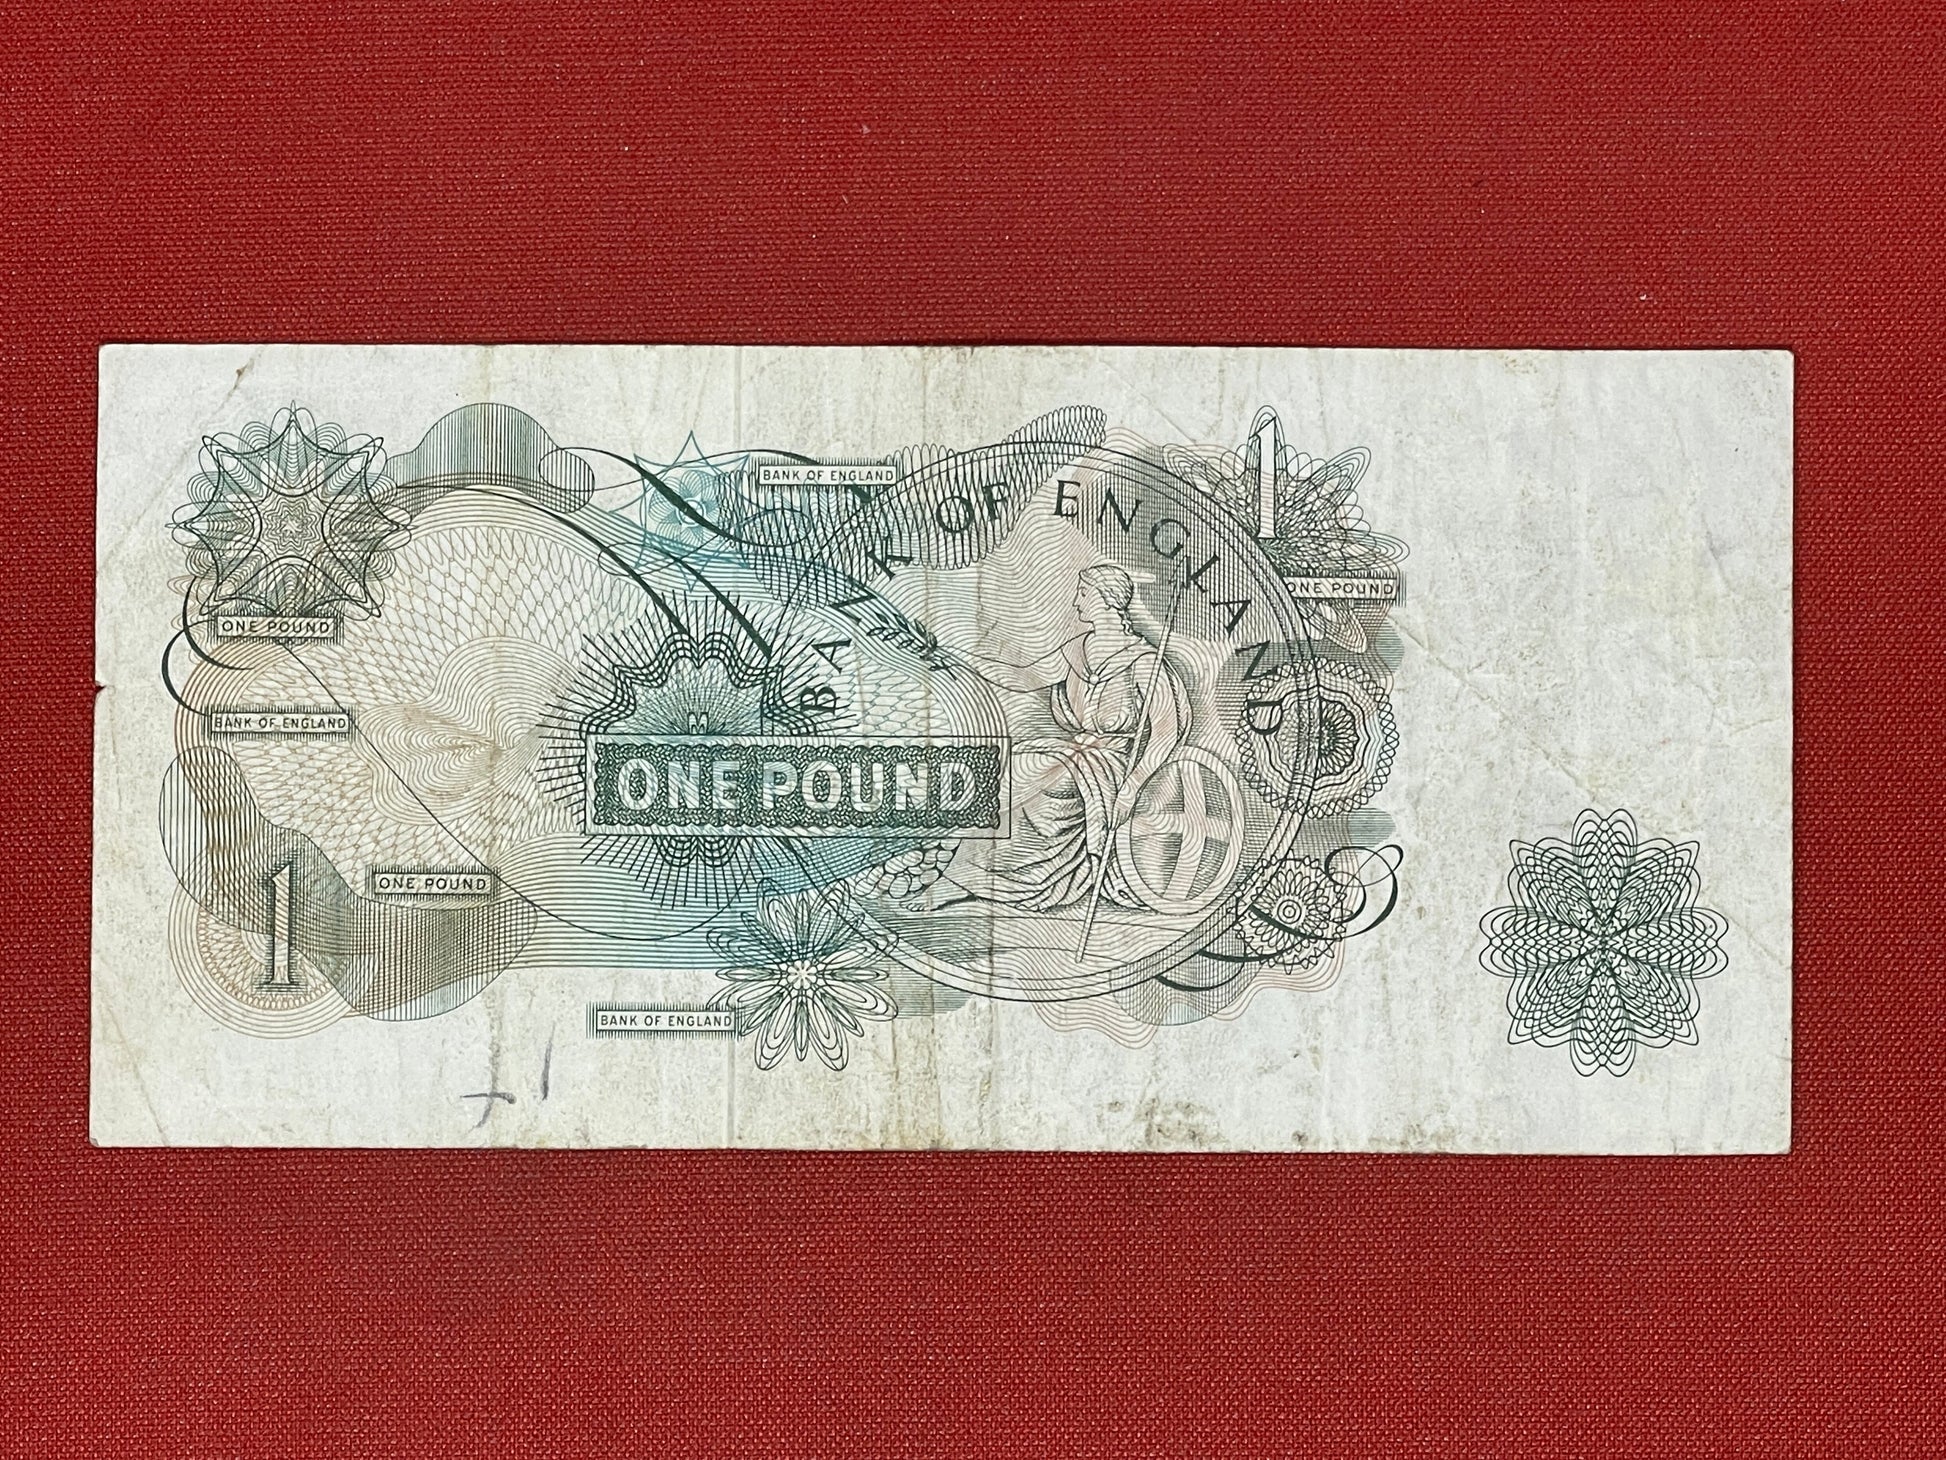 Bank of England £1 Banknote Signed J Hollom 1962 - 1966 ( Dugg B288 )